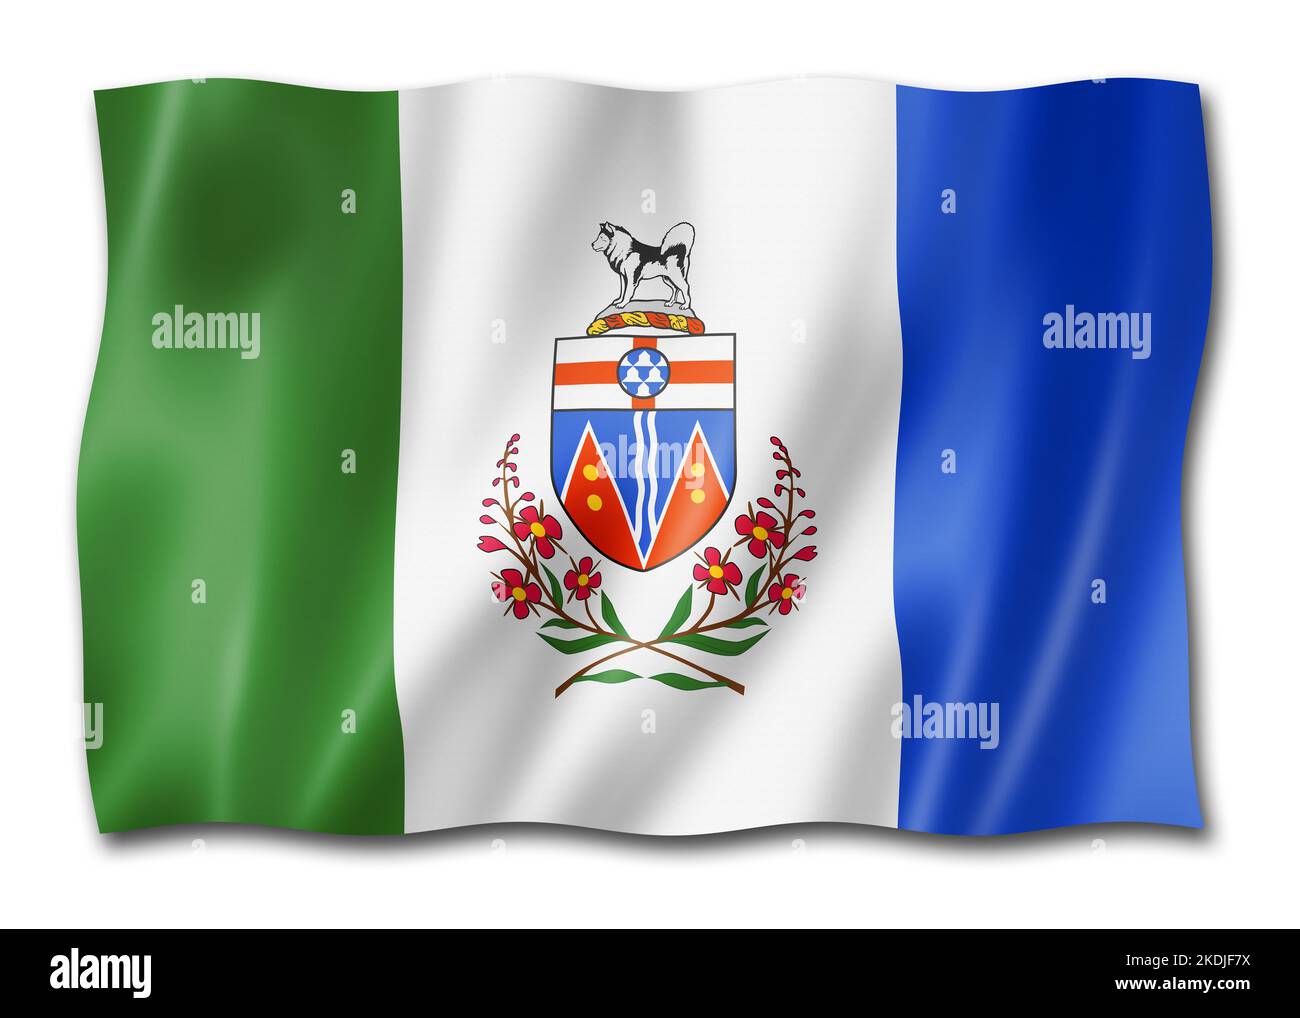 Yukon territory flag, Canada waving banner collection. 3D illustration Stock Photo